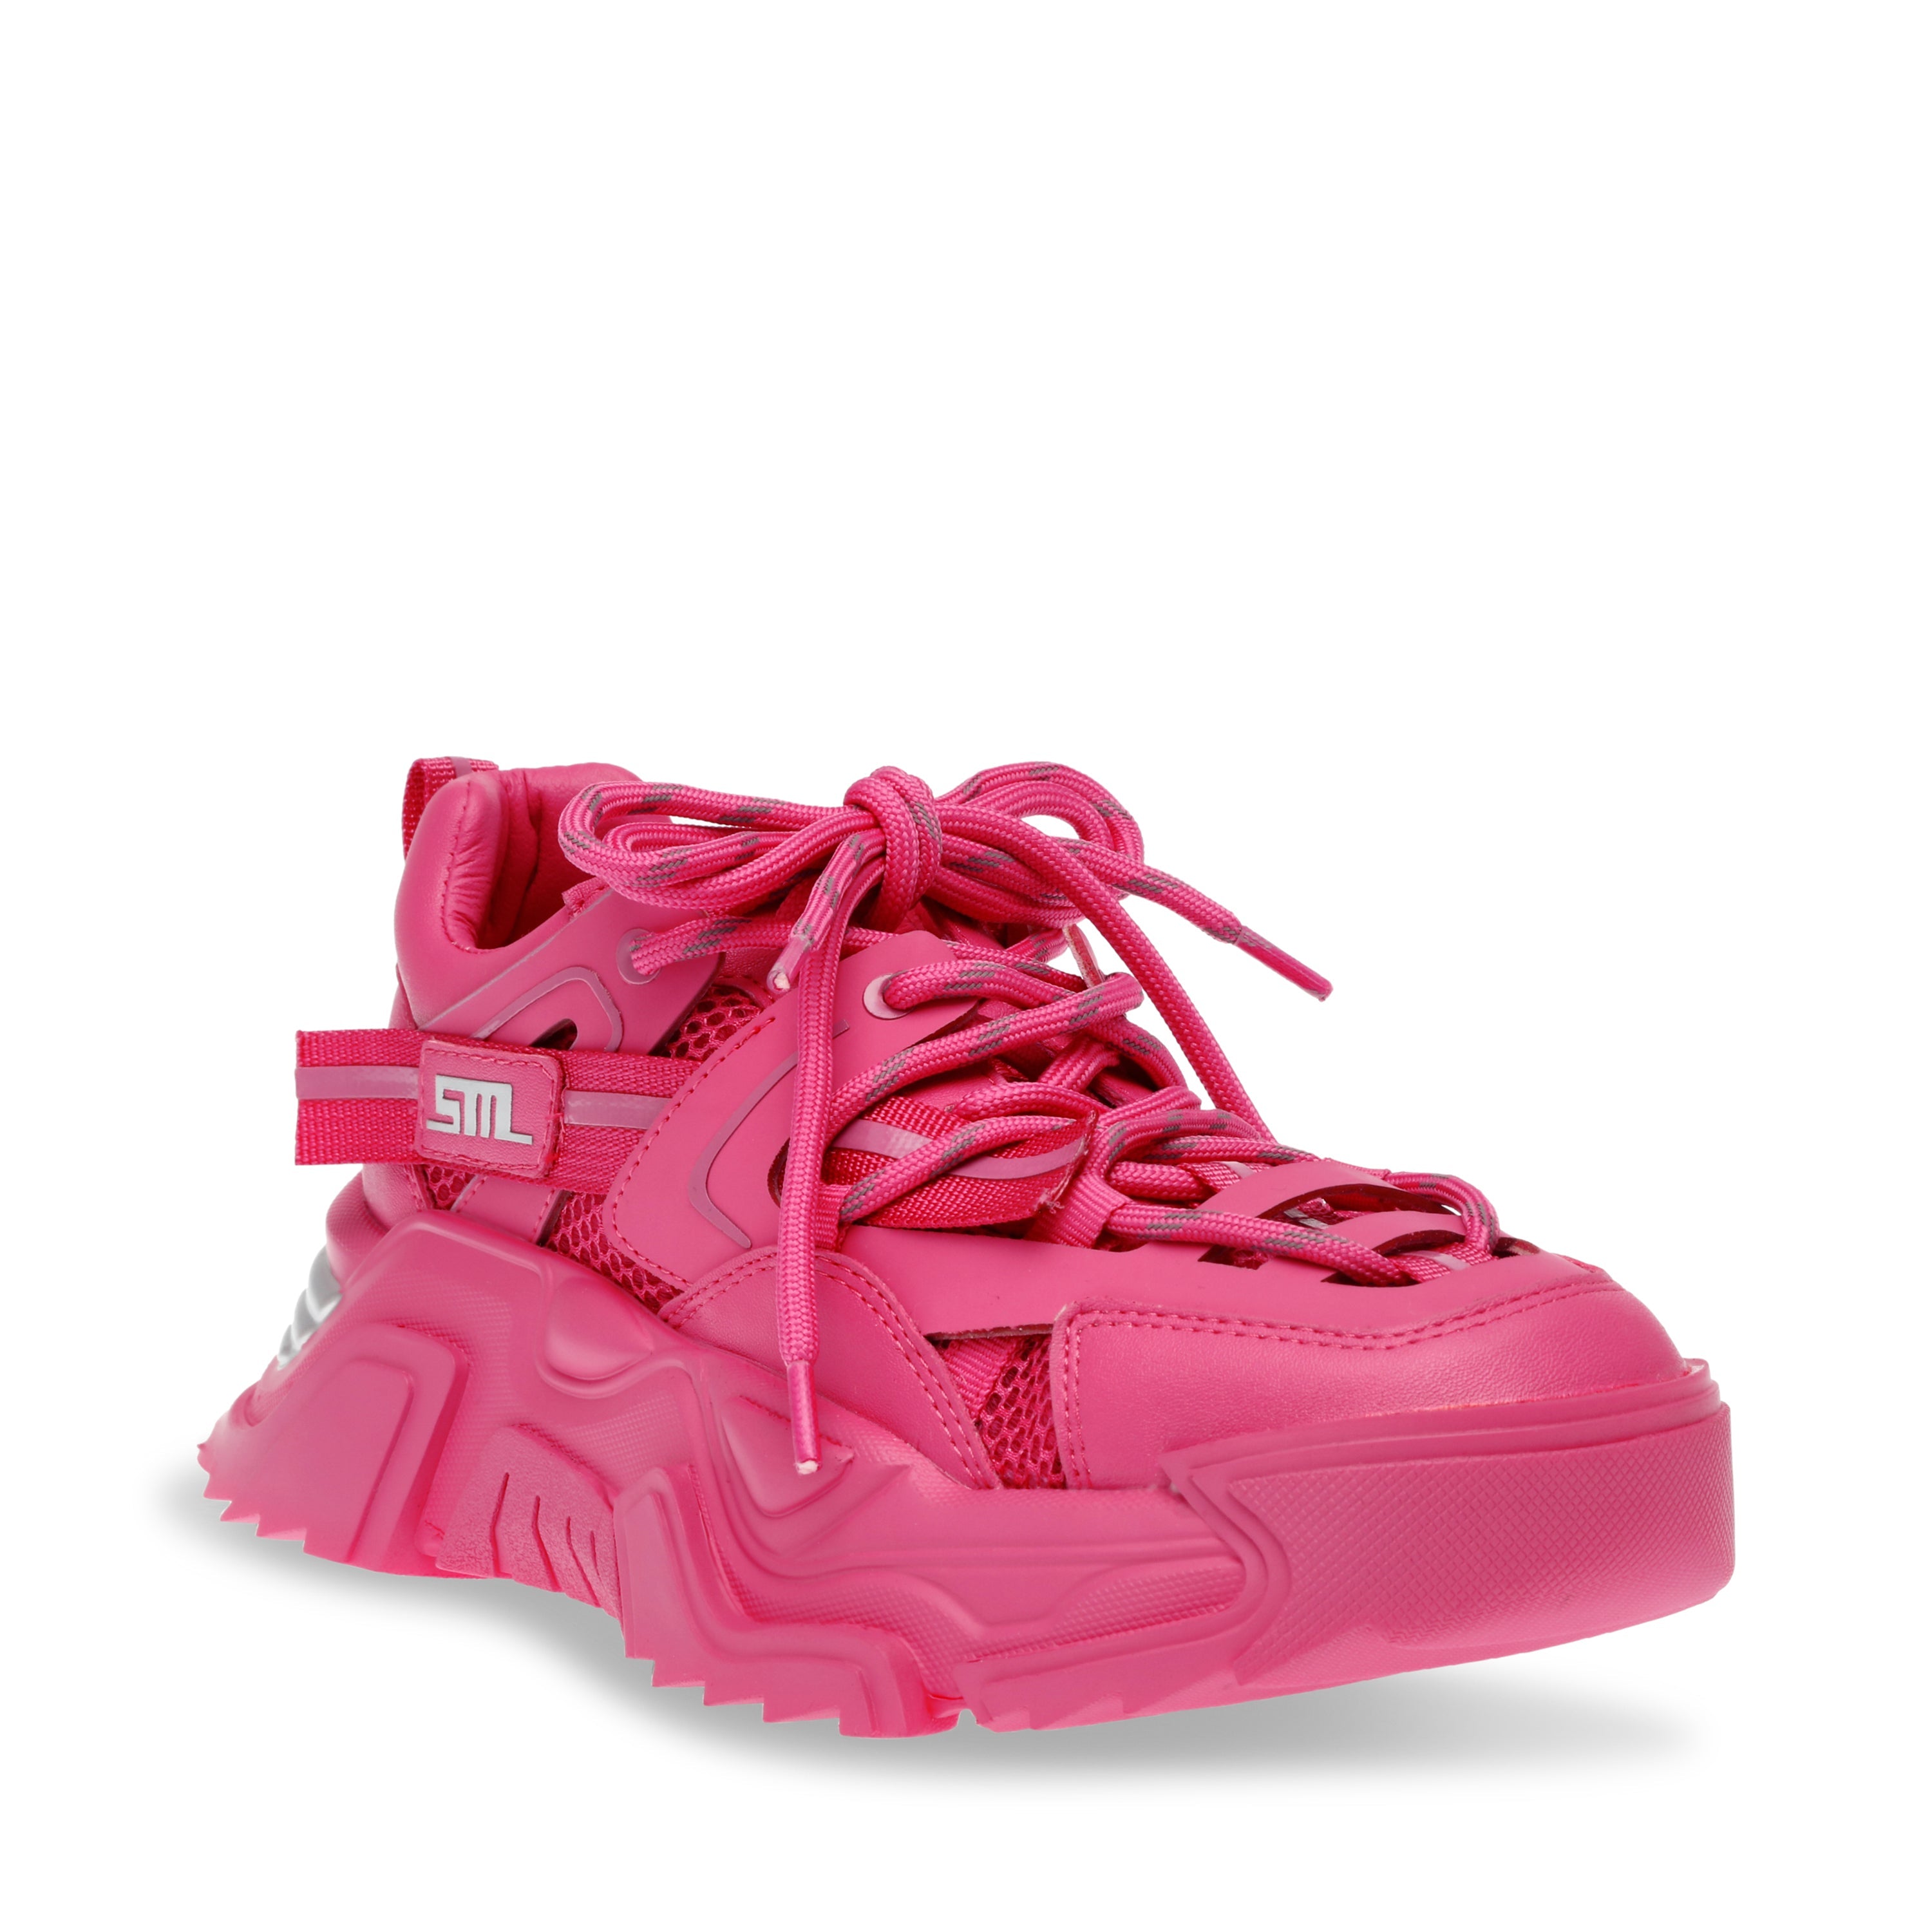 Kingdom Sneaker Pink/Silver- Hover Image